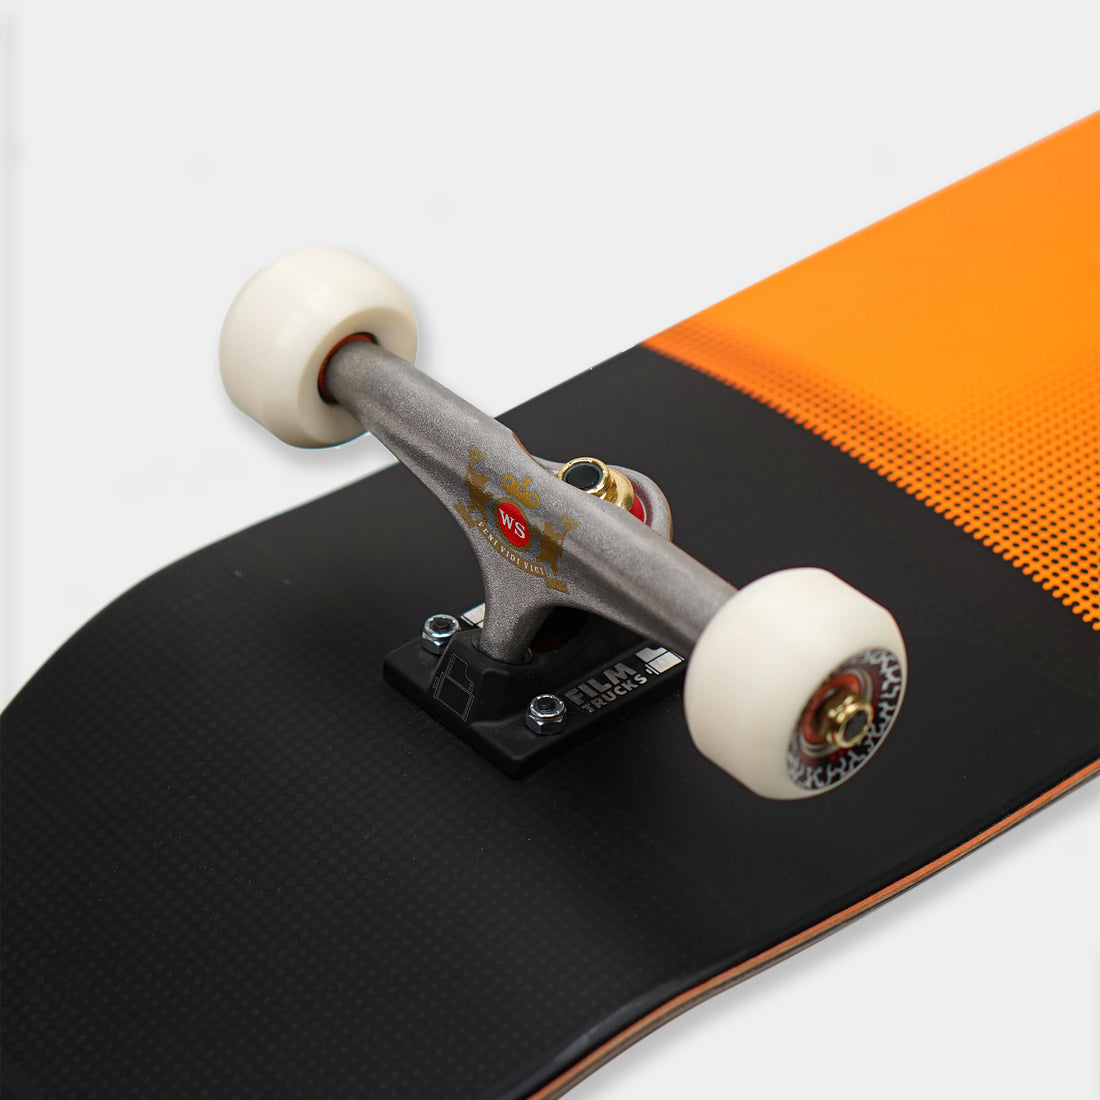 Wallstreet Skateboard Complet - Surligneur Orange Premium